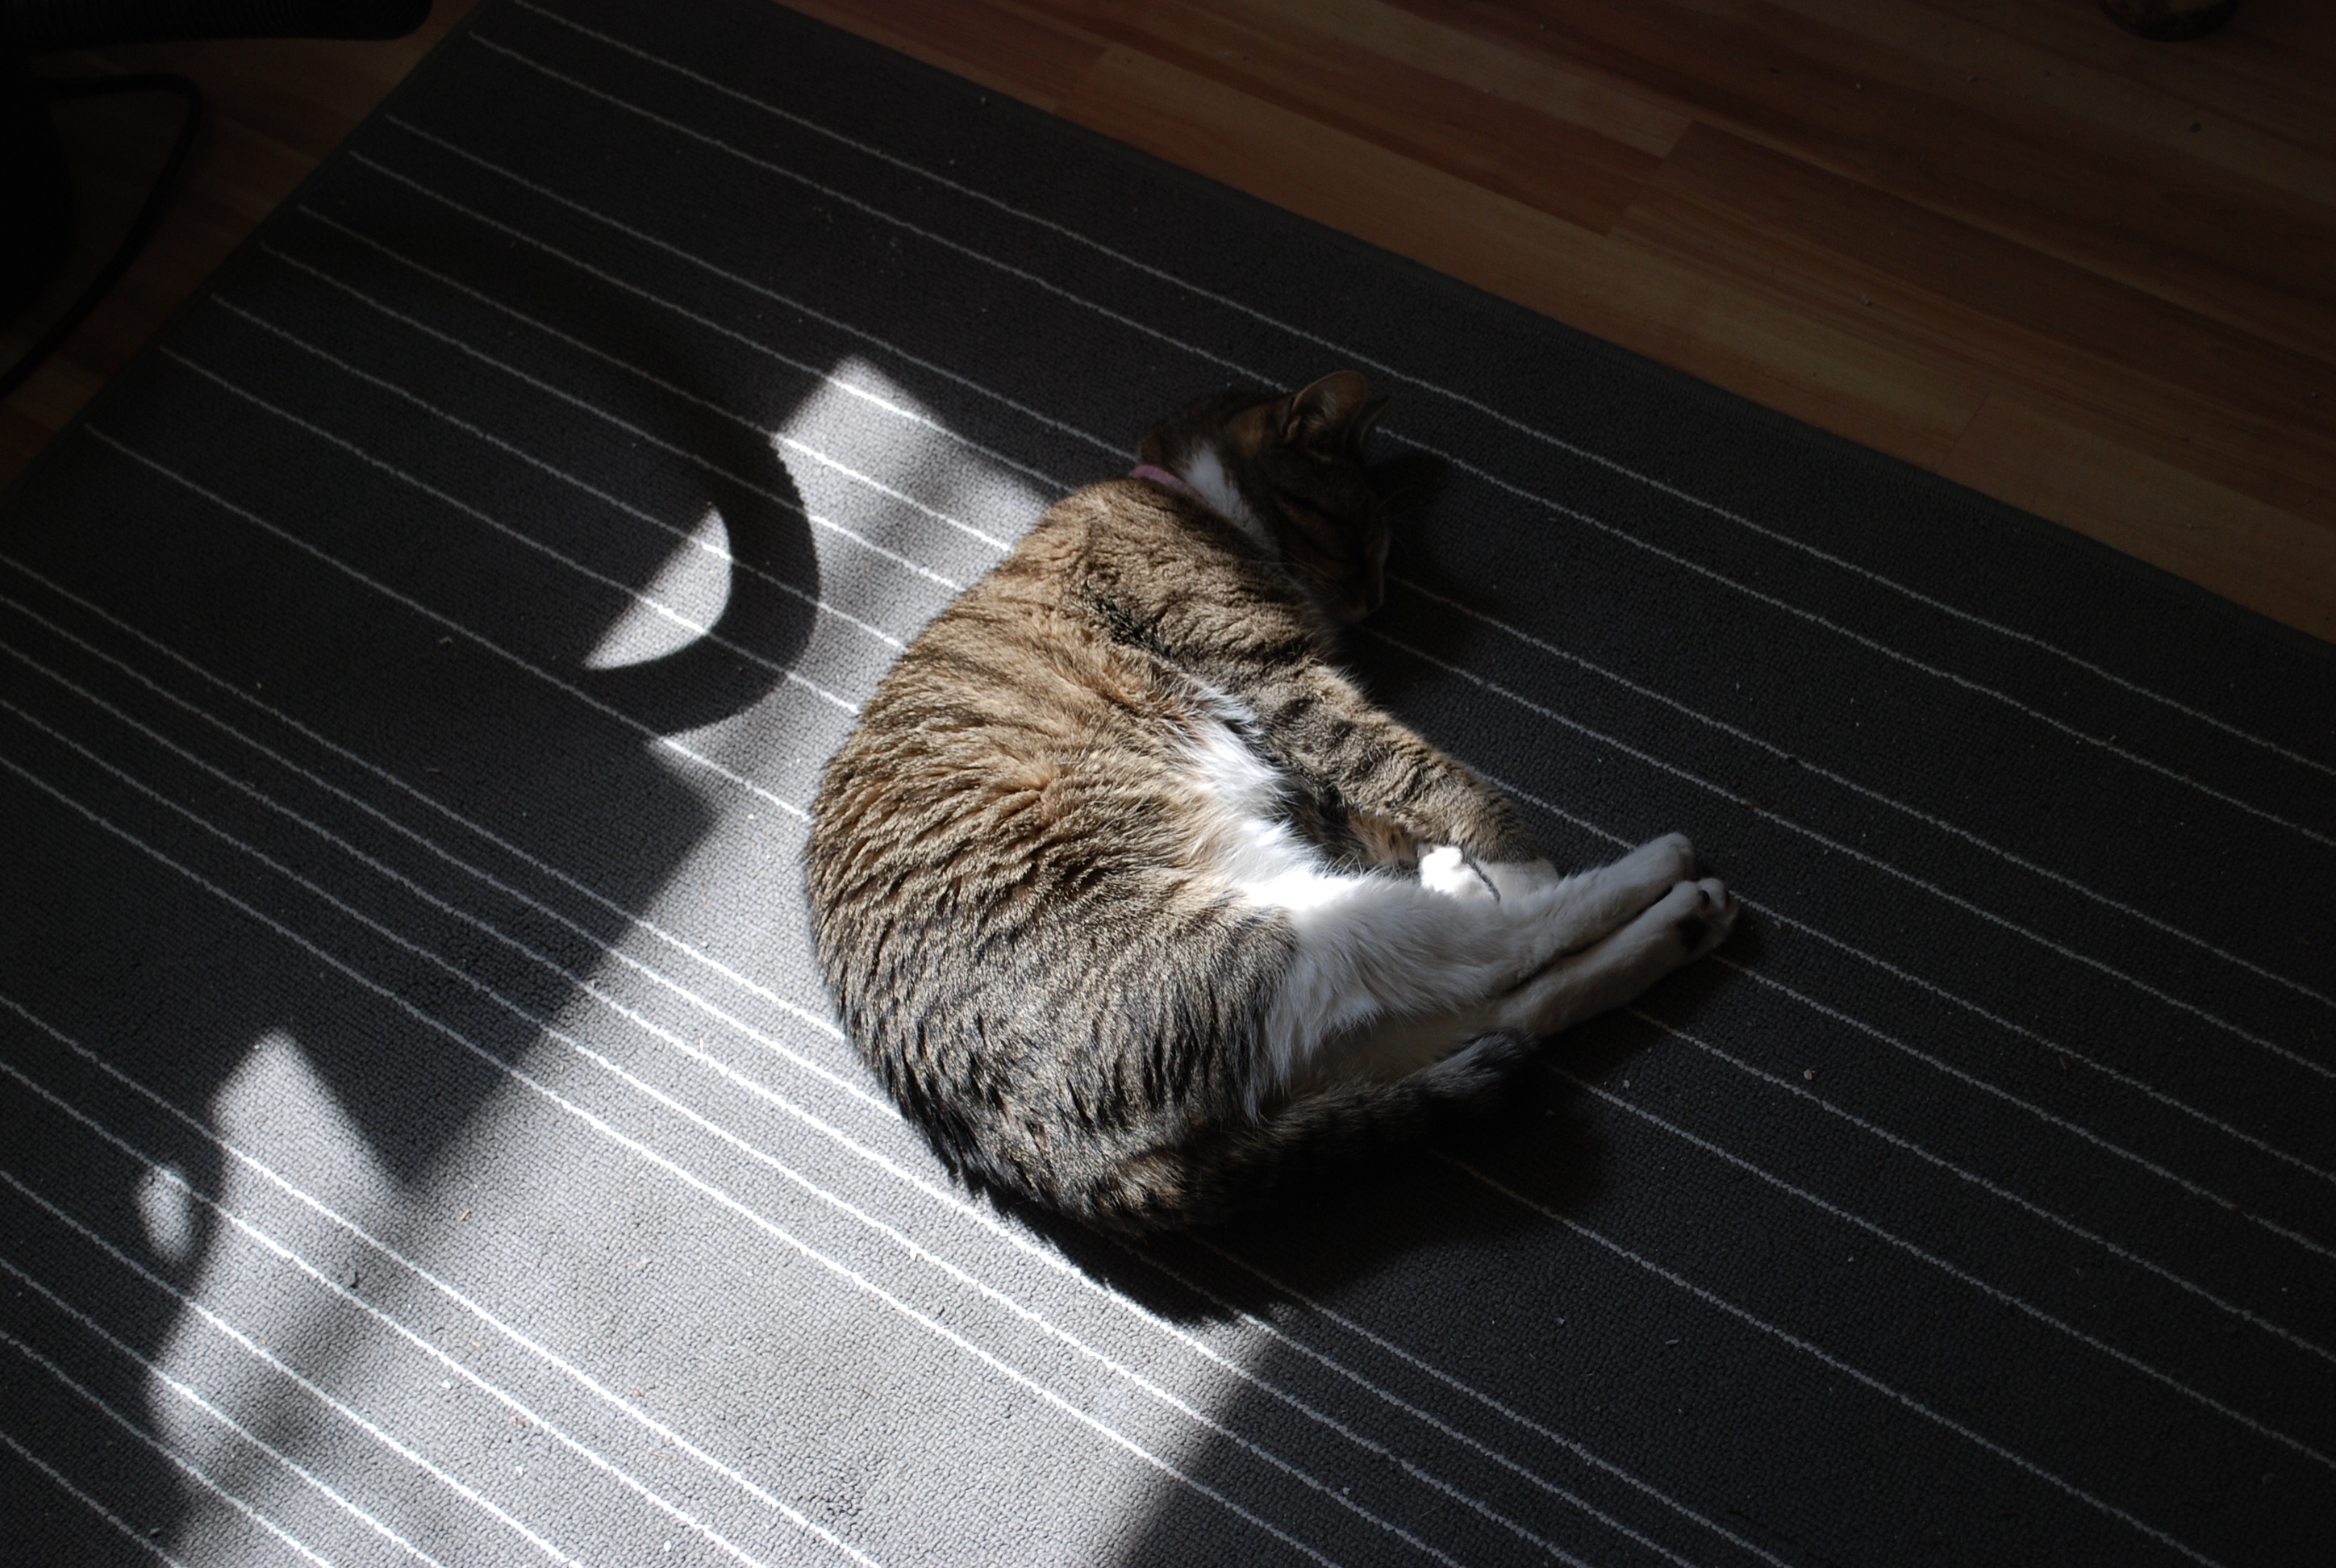 Sally slept in a sunbeam.